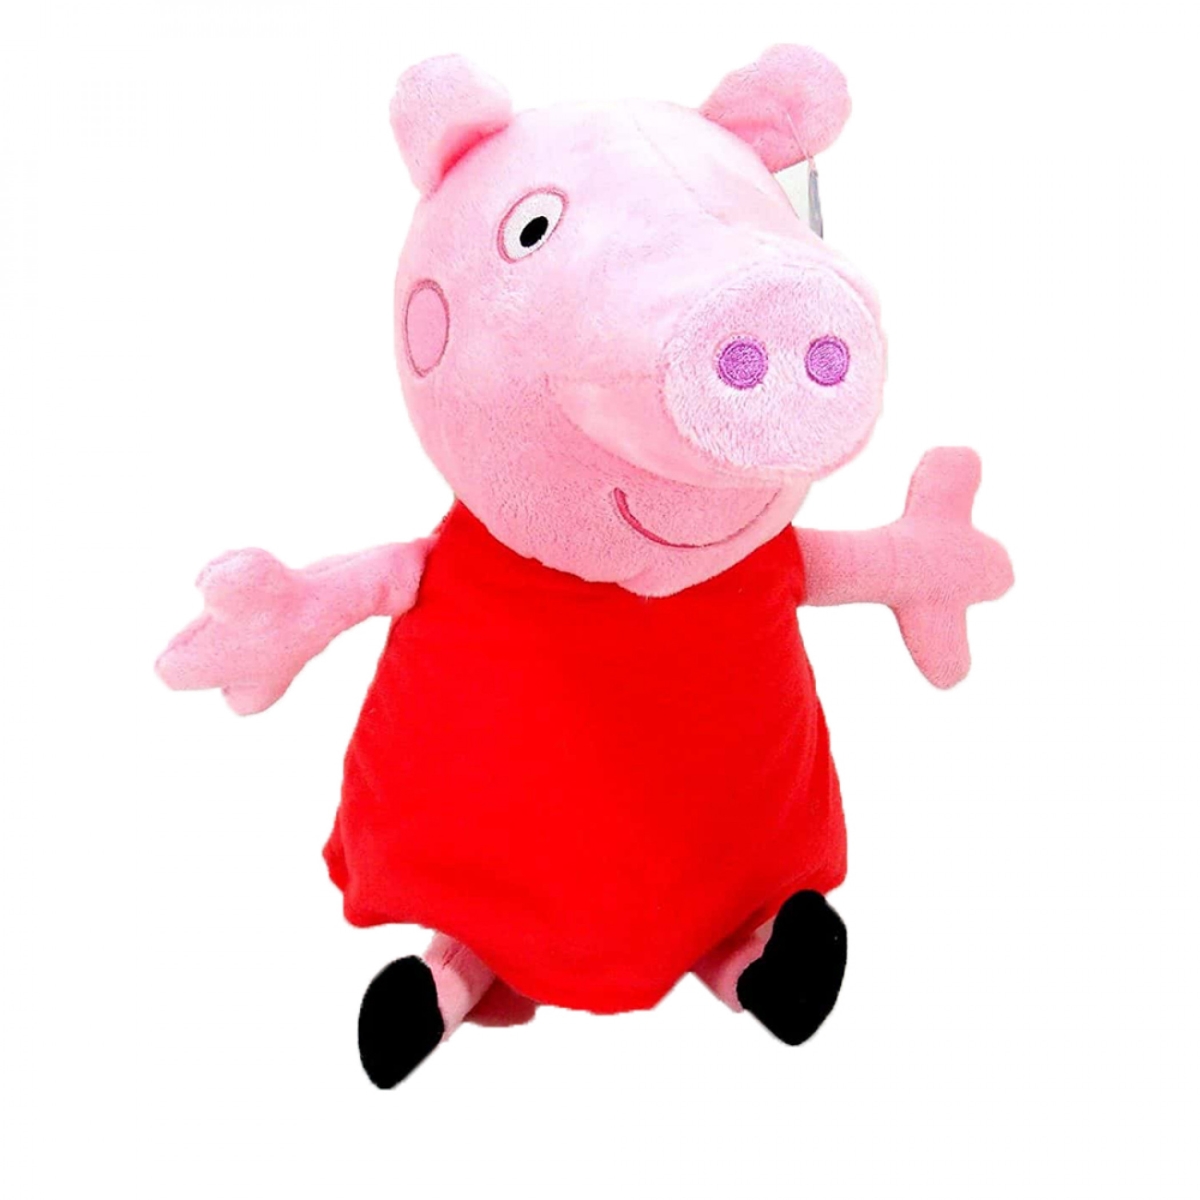 Picture of Peppa Pig 846713 13.5 in. Peppa Pig Peppa Plush Doll